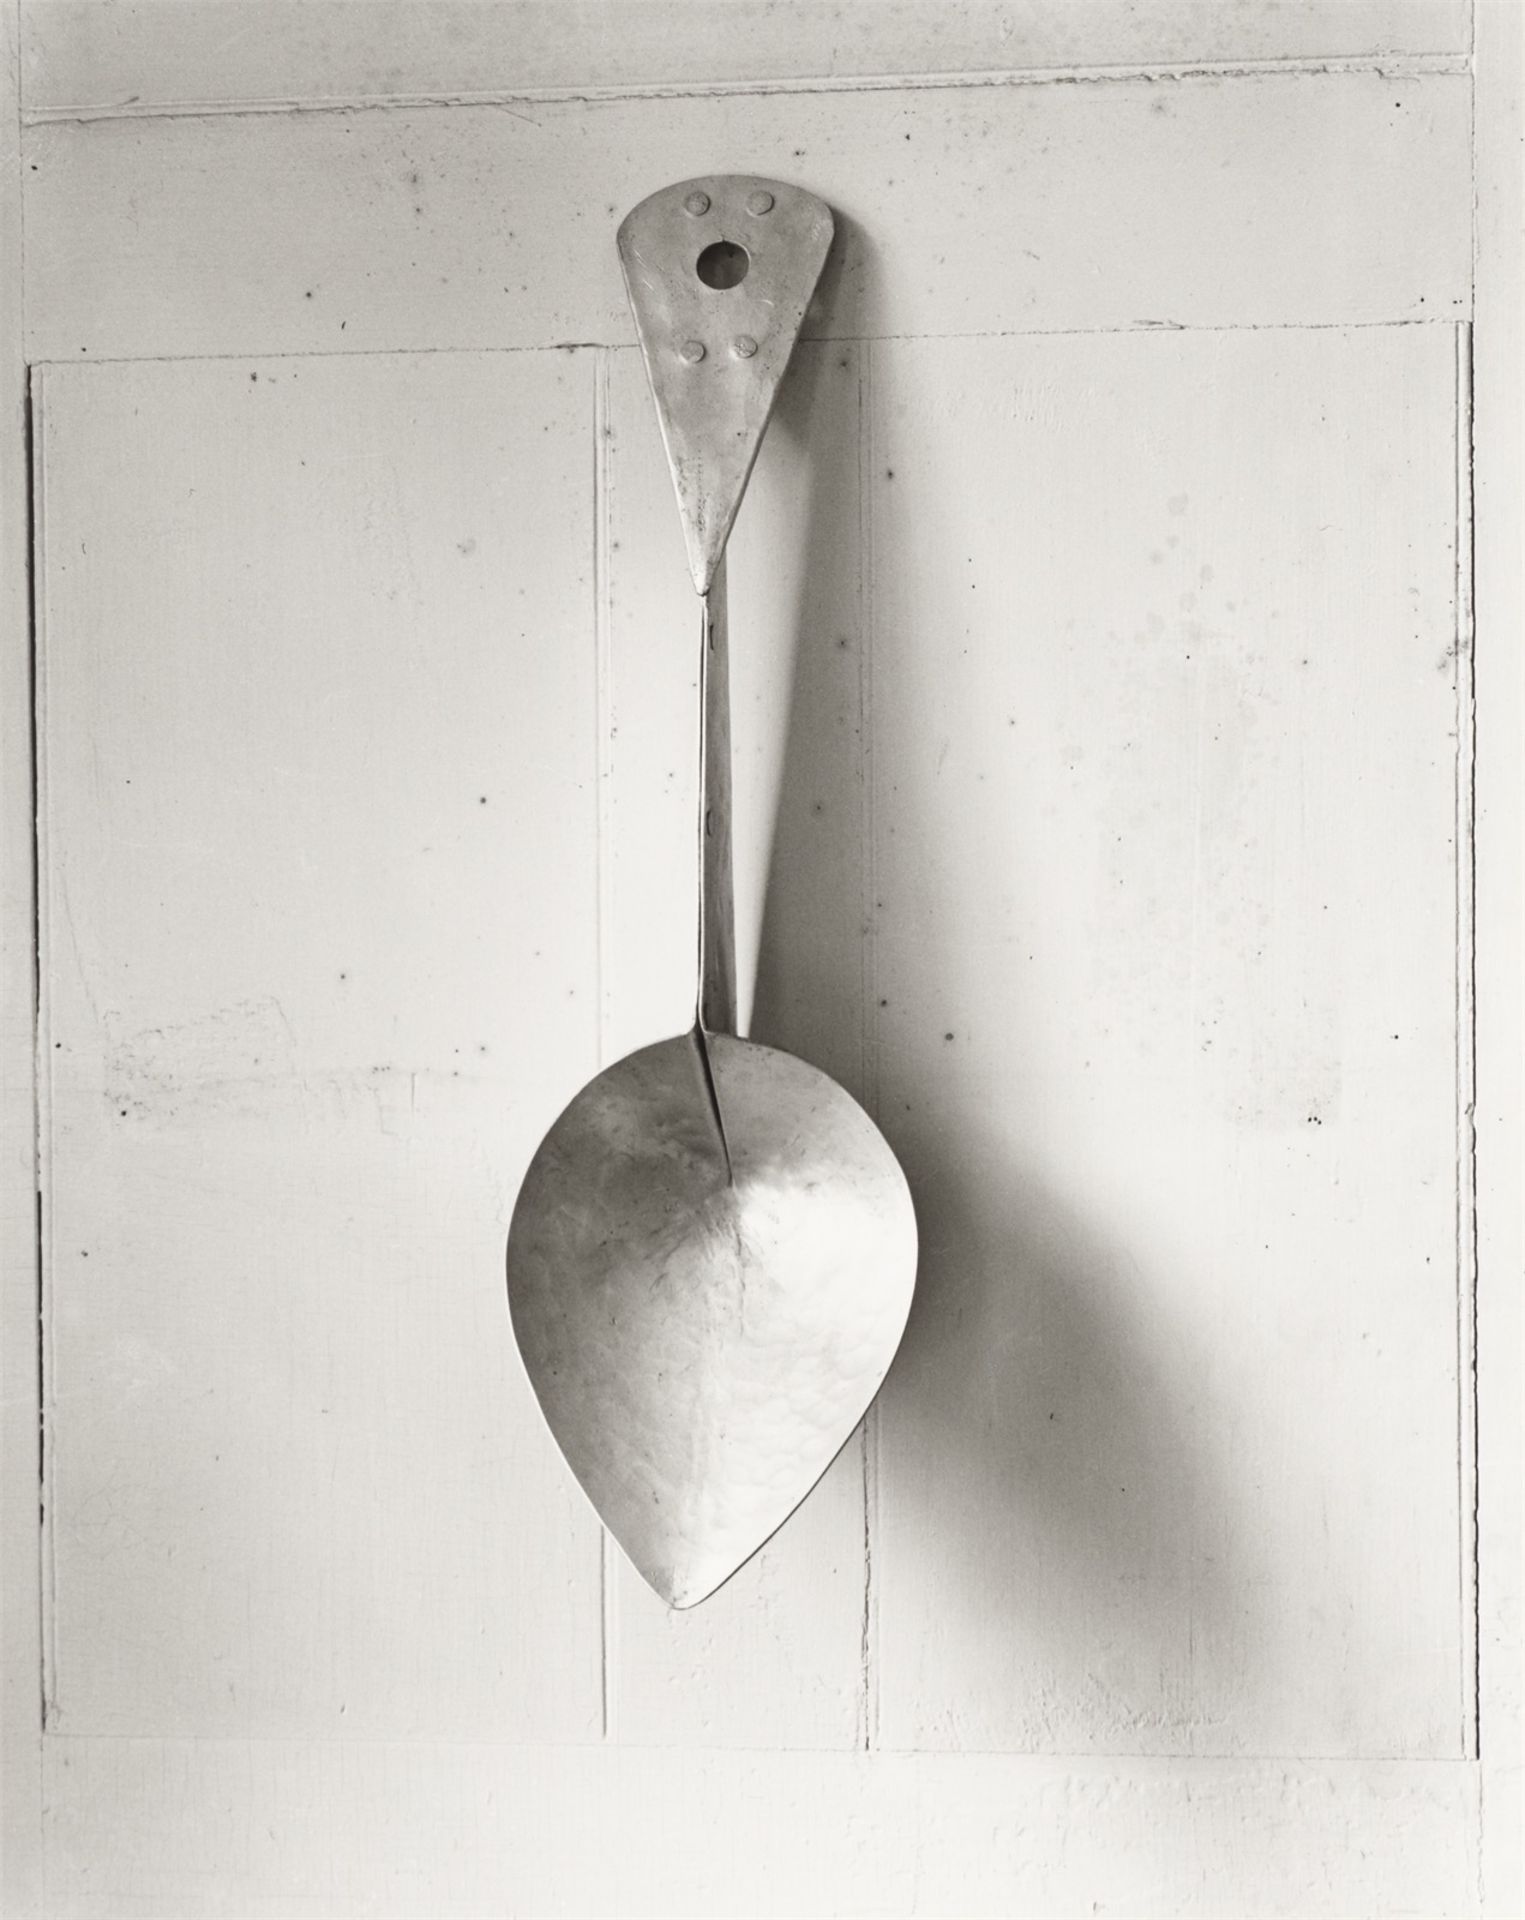 Evelyn Hofer. ”Calder Spoon, Roxbury”. 1976